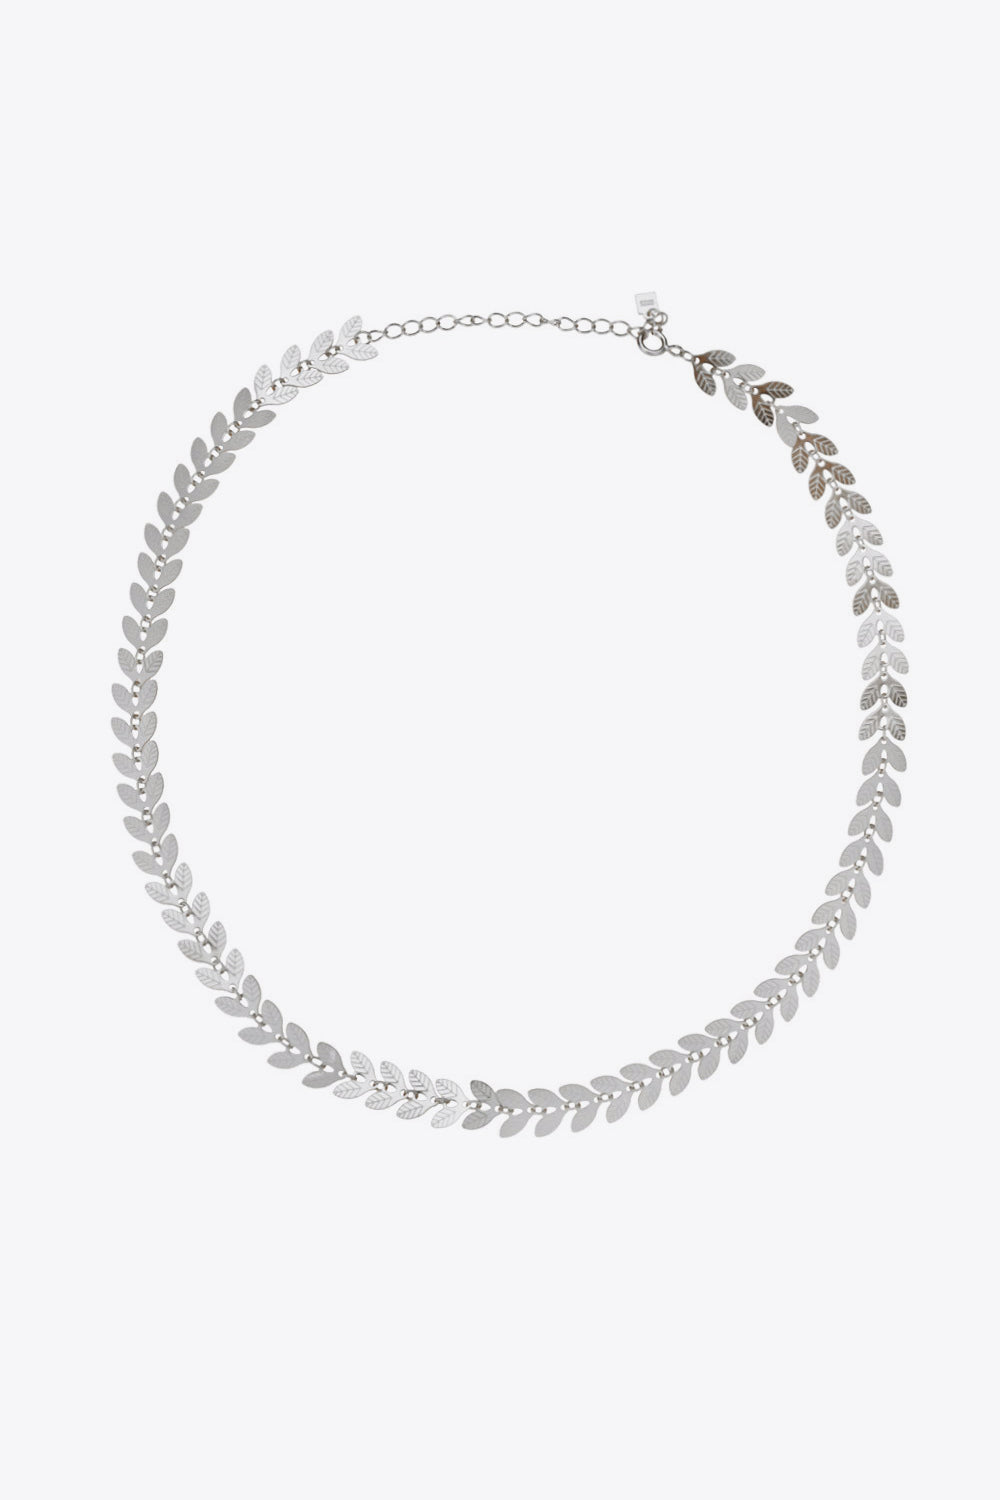 925 Sterling Silver Leaf Necklace - Necklaces - FITGGINS